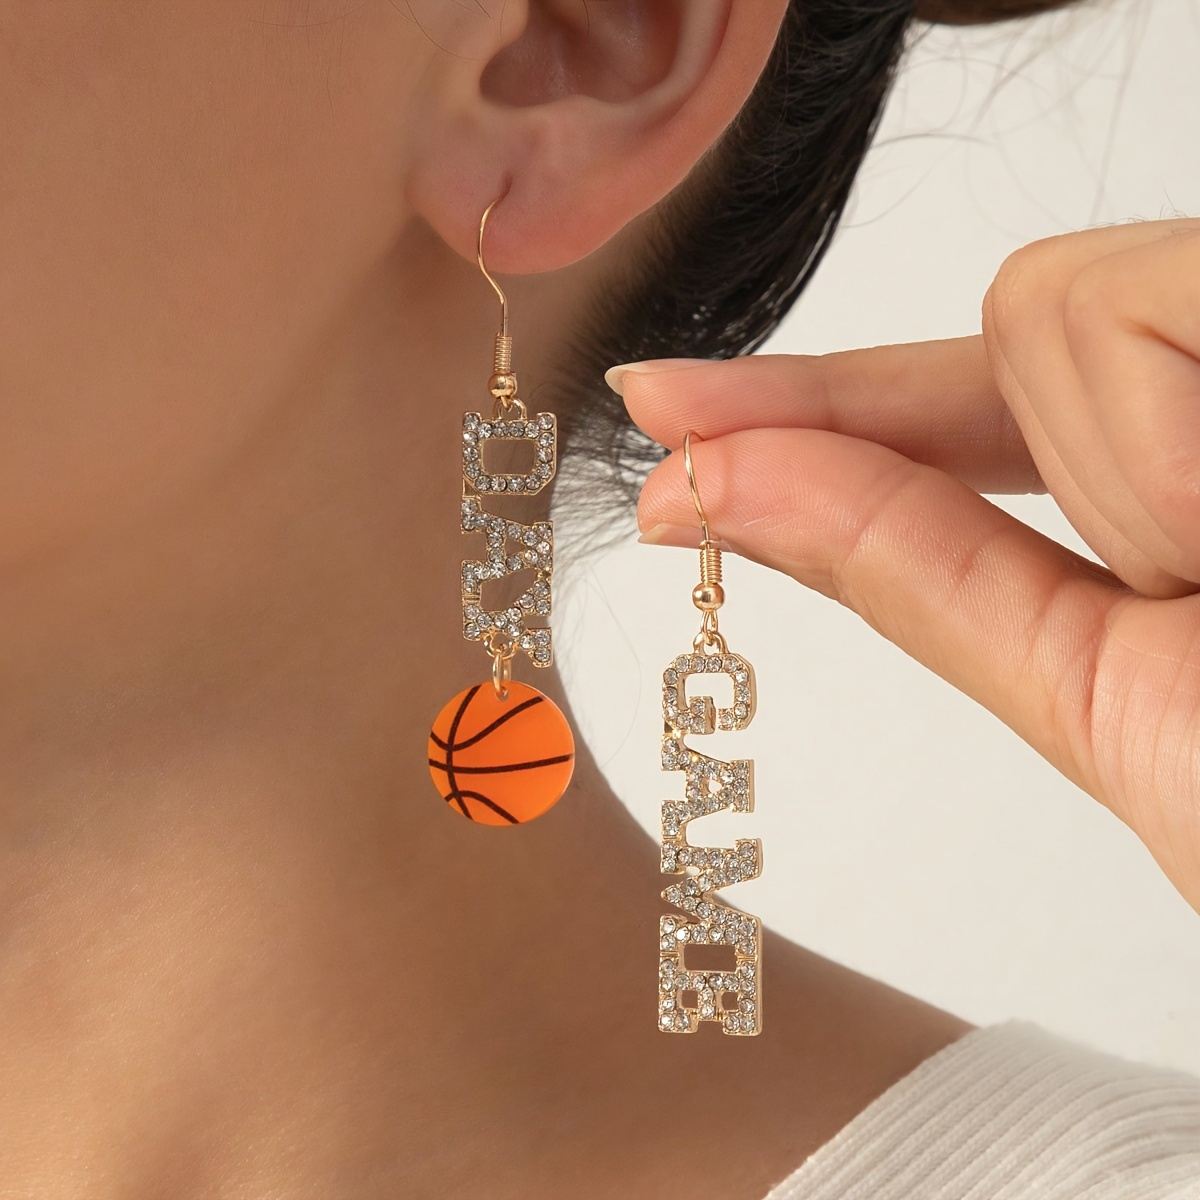 Basketball Earrings, Sports Earrings, Ball Earrings, NBA Earrings, Novelty